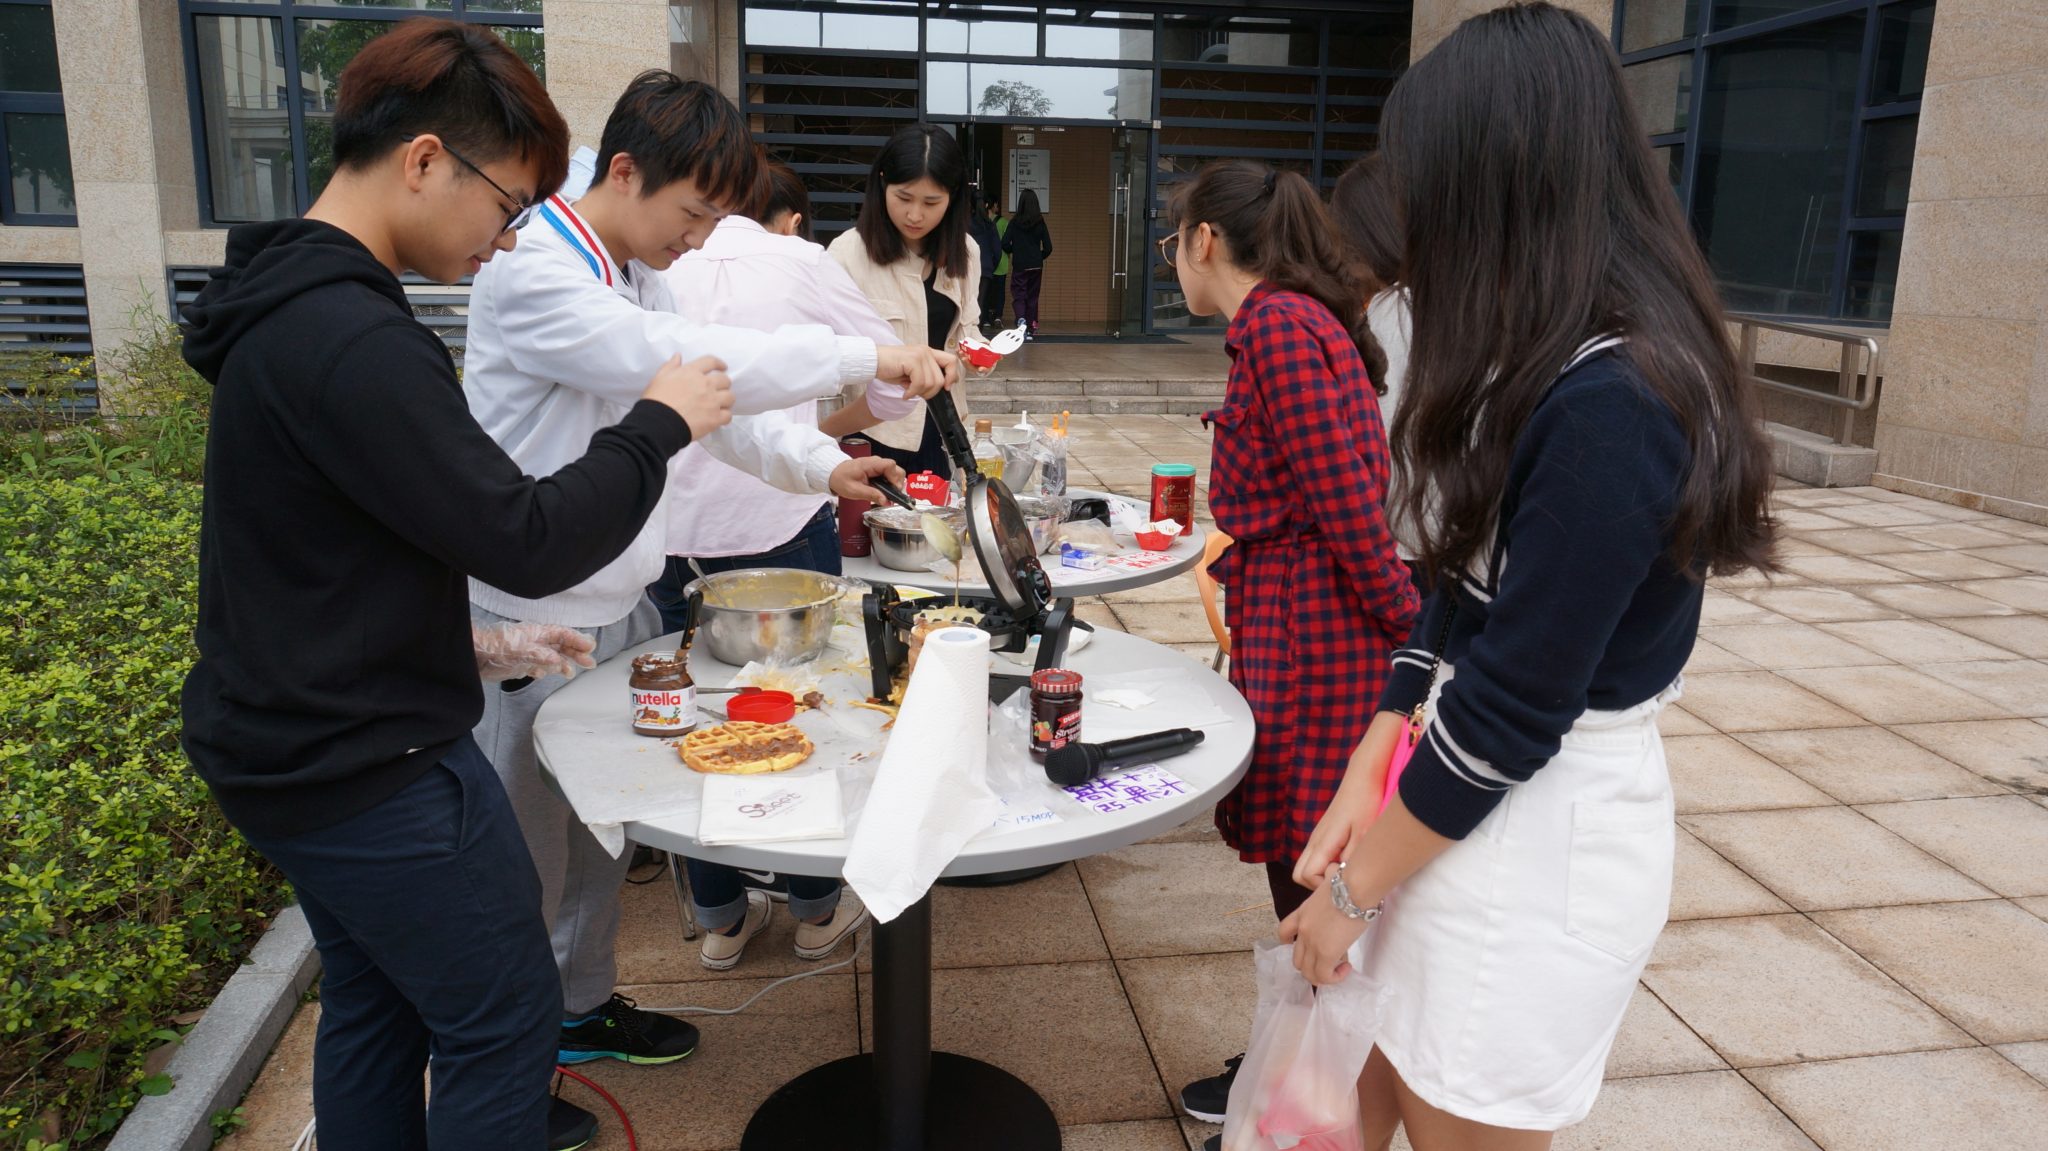 Fresh waffles were very popular at the charity bazaar. 新鮮的華夫餅在義賣活動很受歡迎。